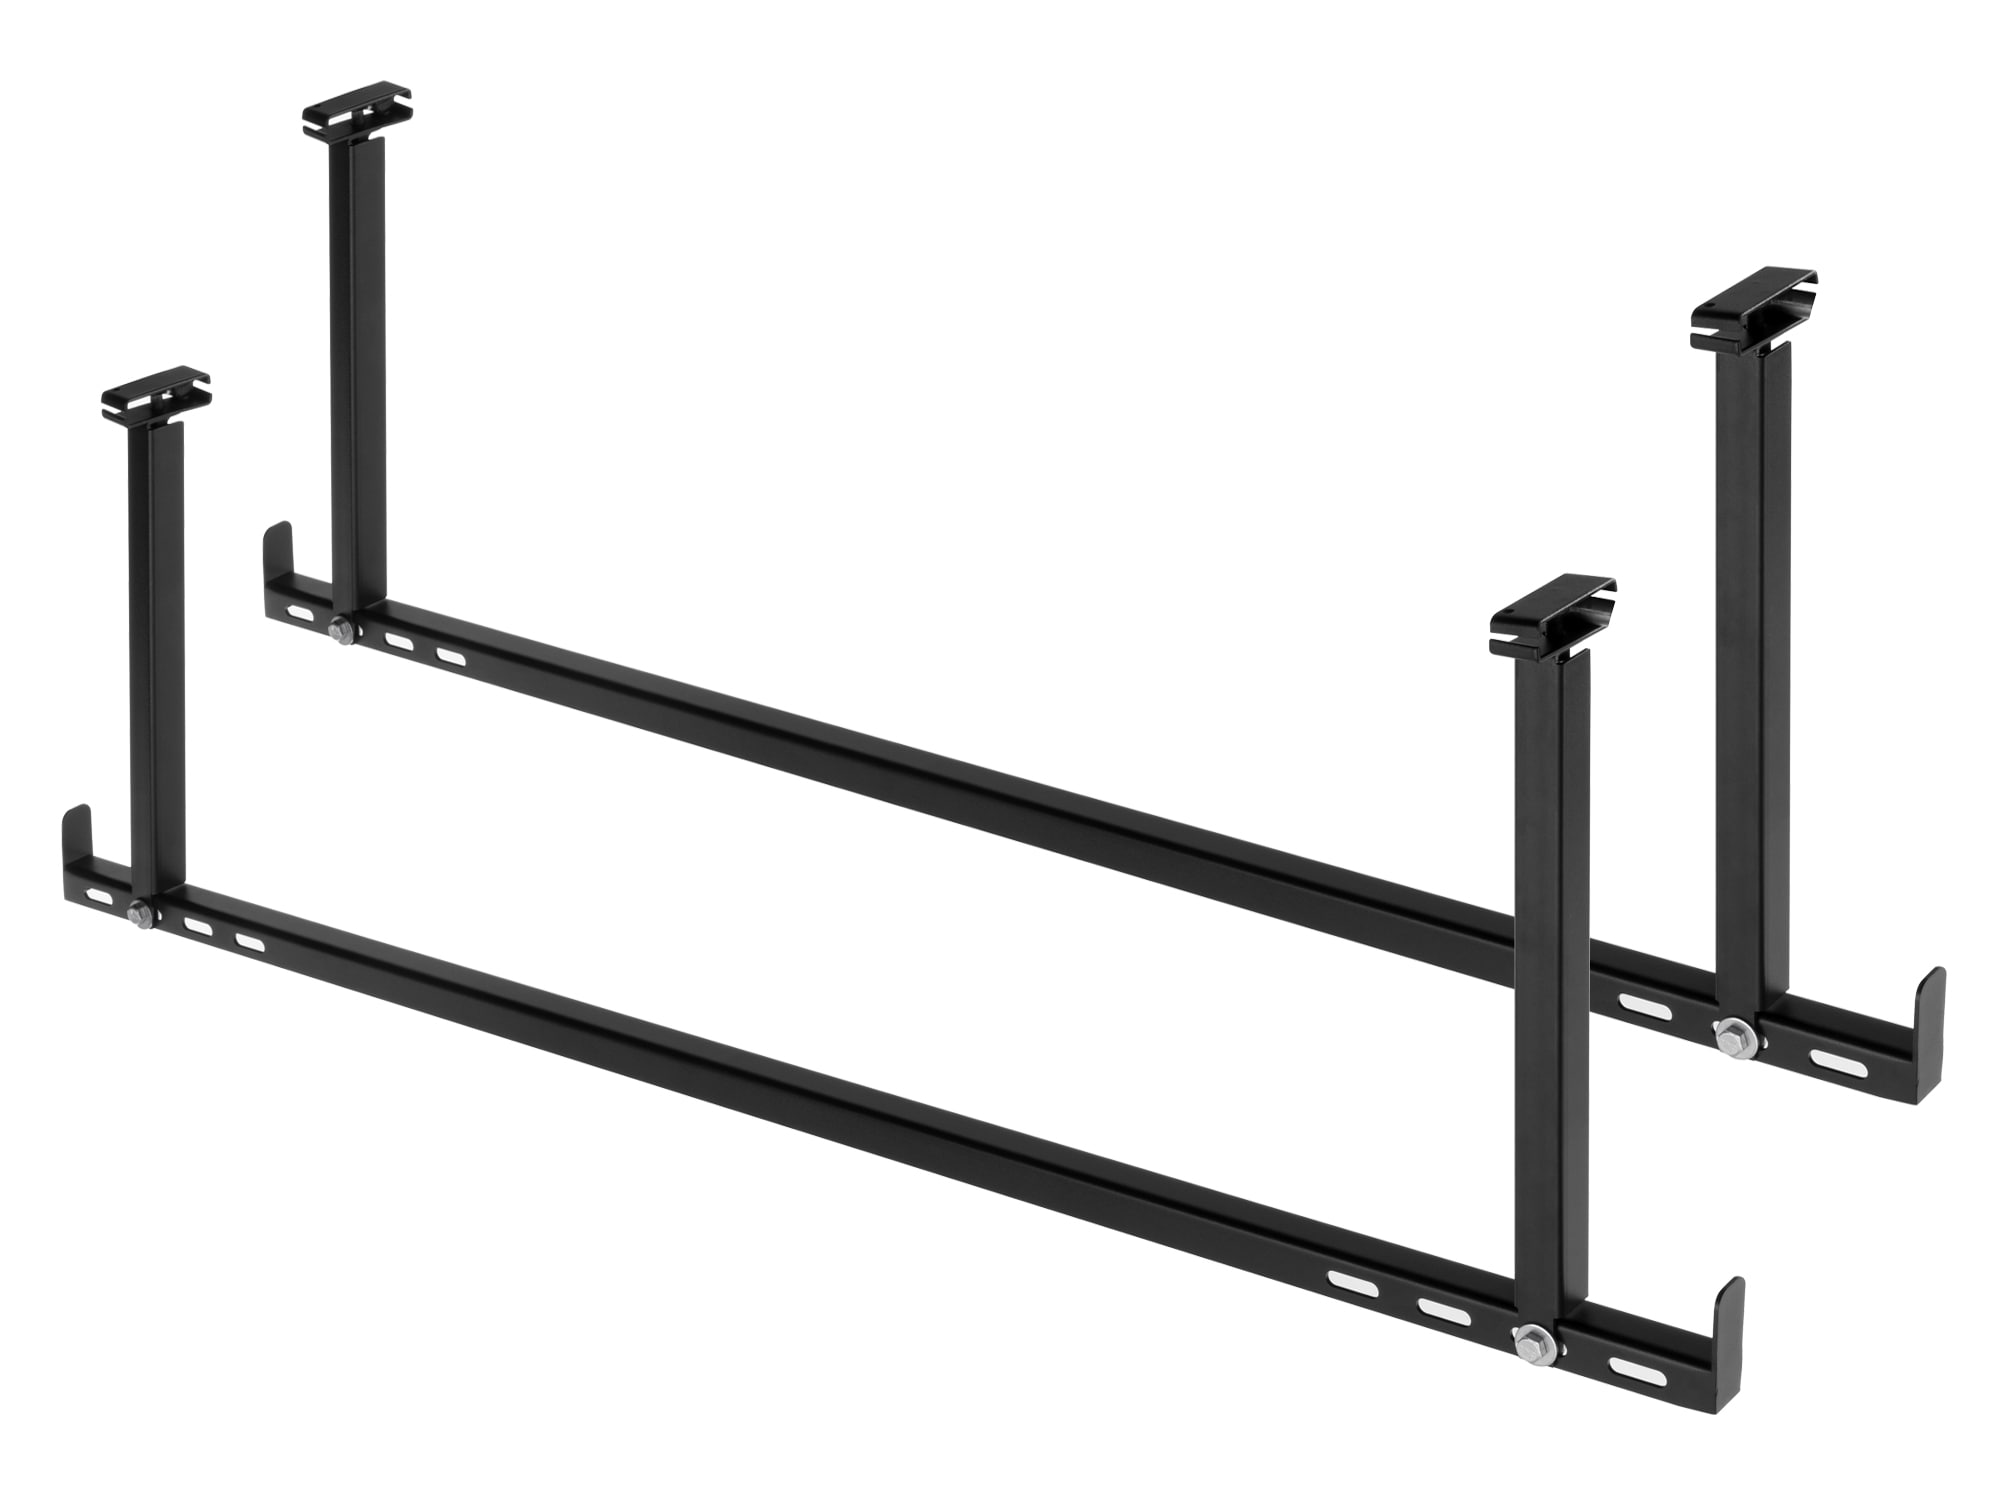 6x PEGBOARD brackets accessory for 2.5" inch shelf 1" spacing to organize garage 